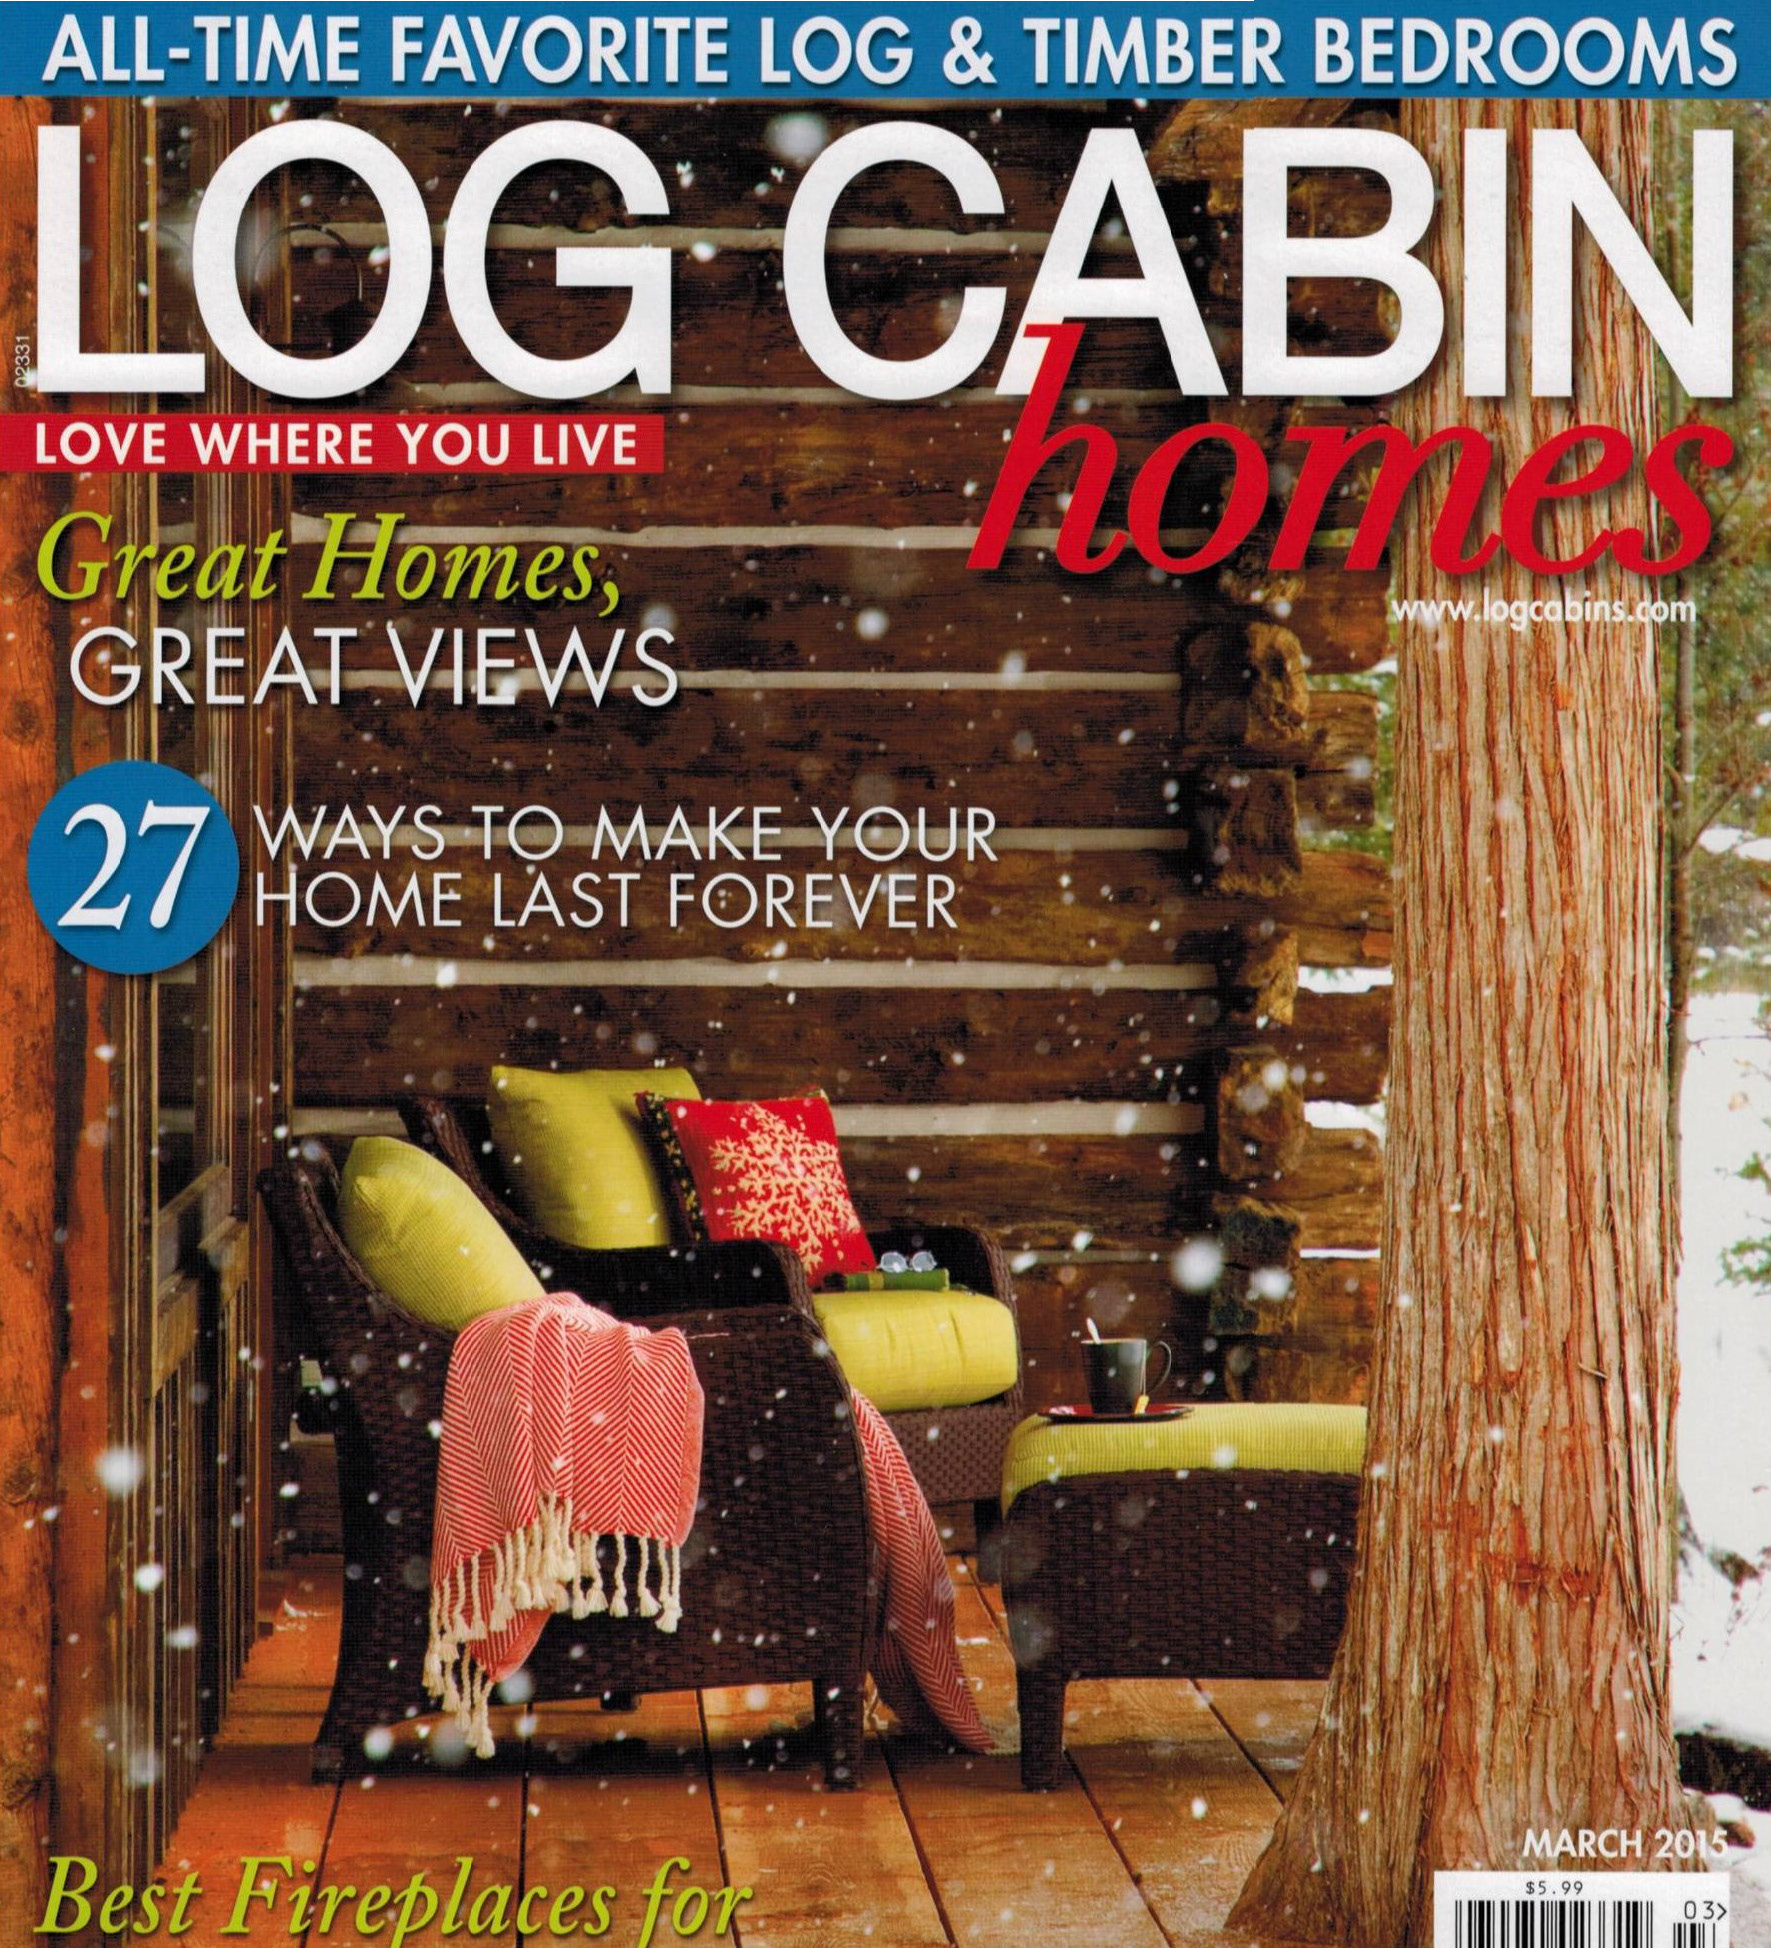 7 Log Cabin Homes-March 2015.jpg